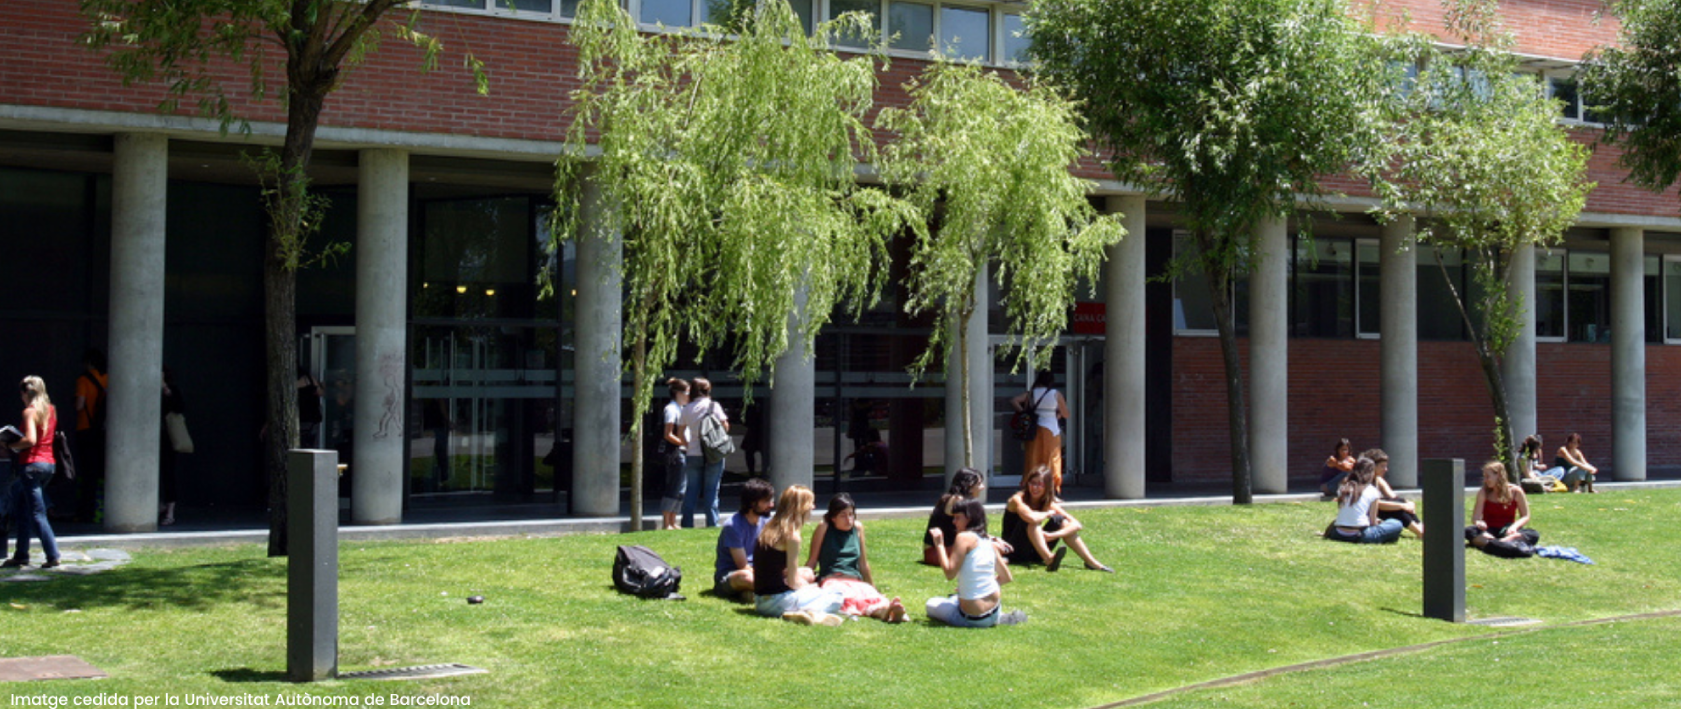 Universidad Autónoma de Barcelona áreas verdes